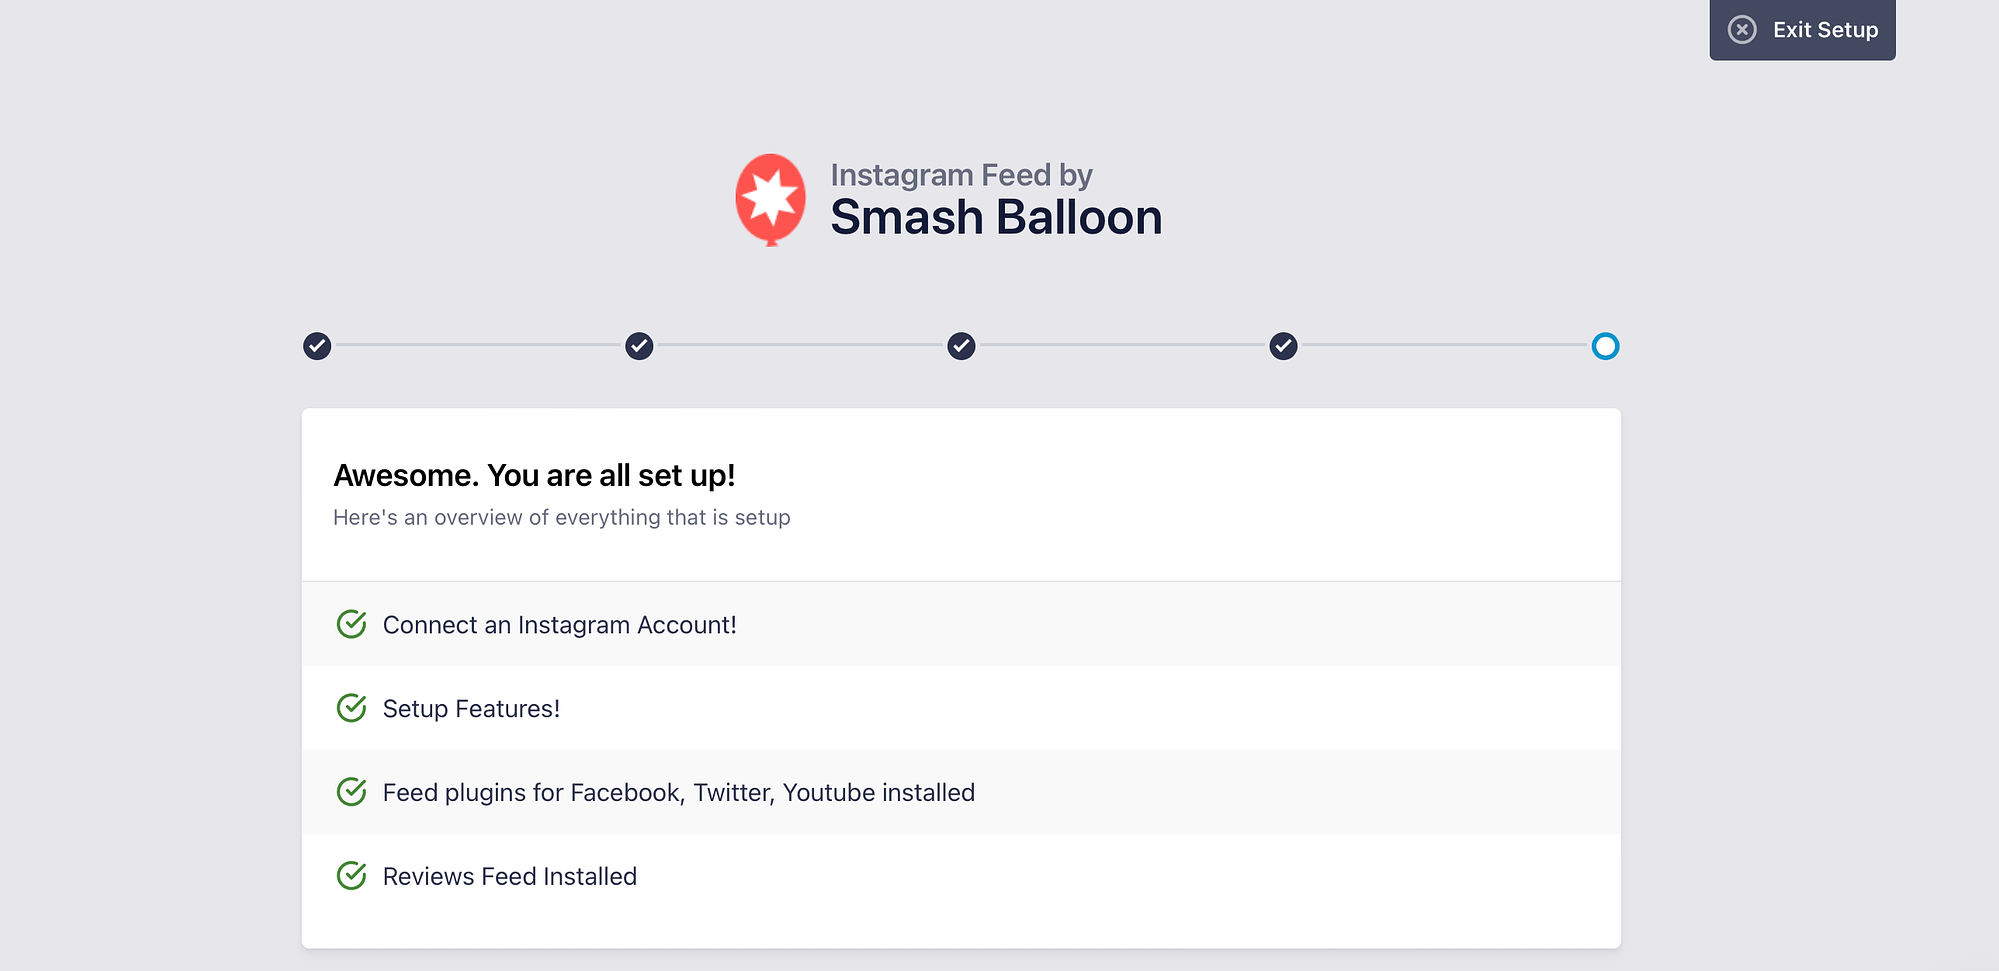 Smash Balloon setup complete.